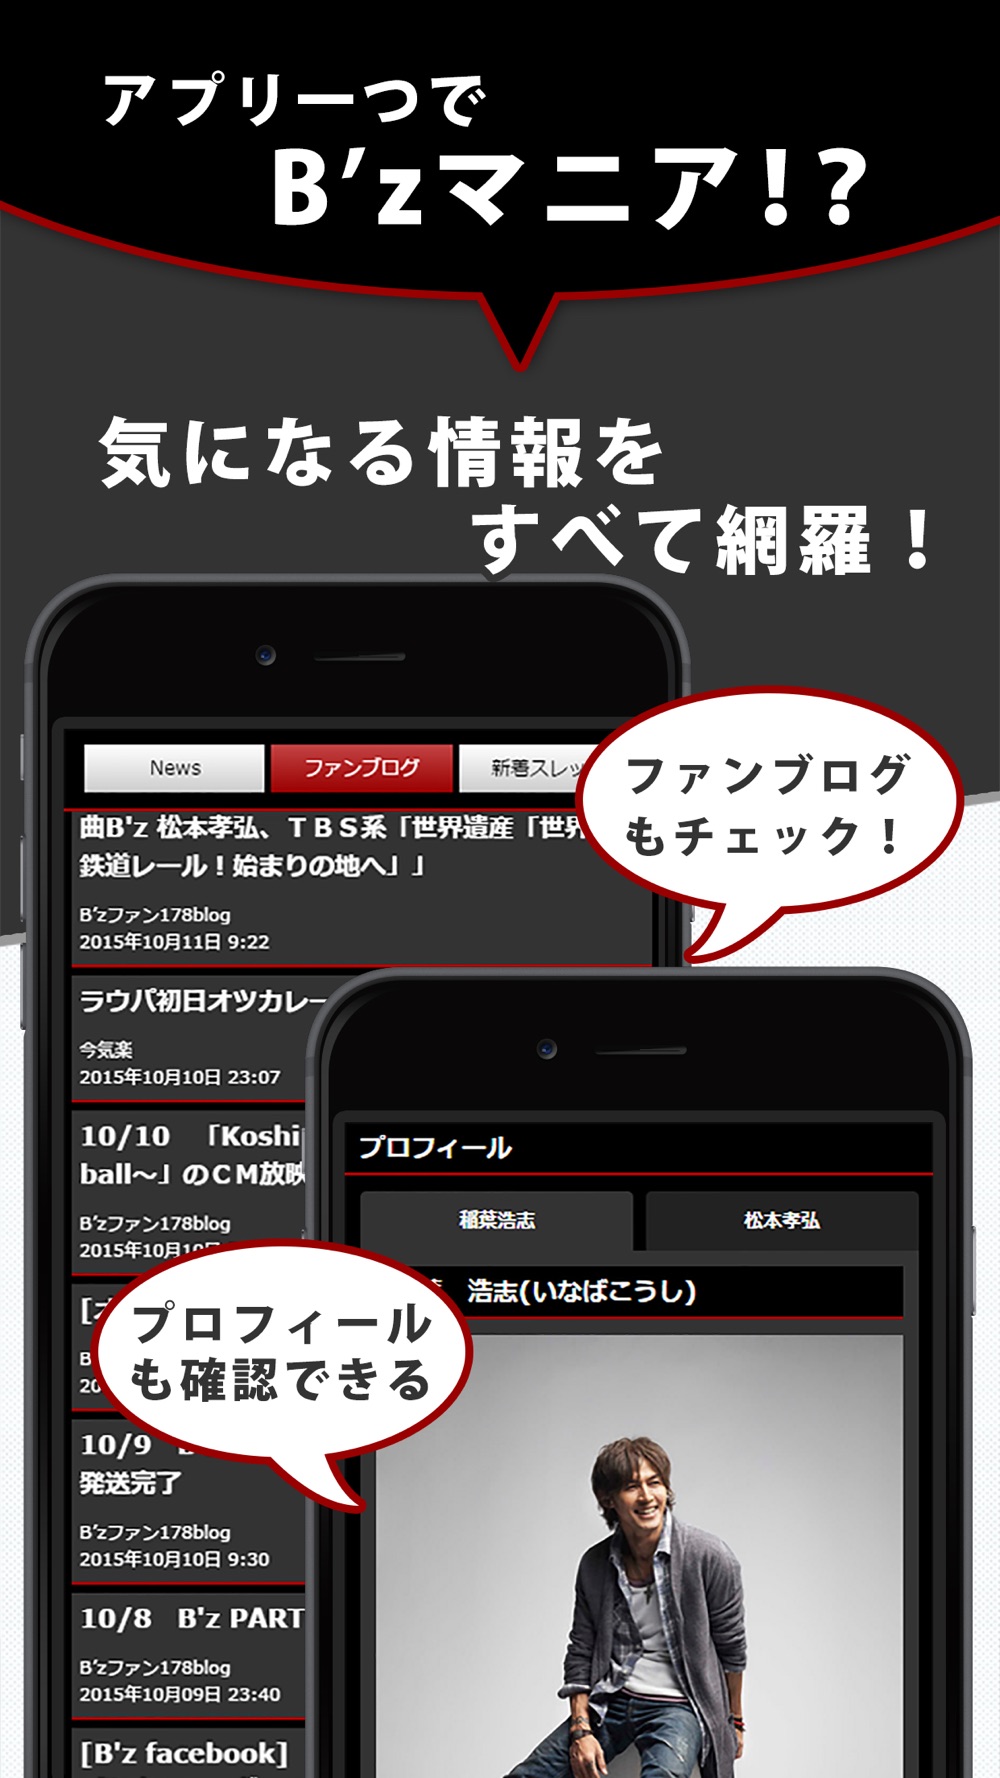 J Pop News For Bz 無料で使えるニュースアプリ Free Download App For Iphone Steprimo Com